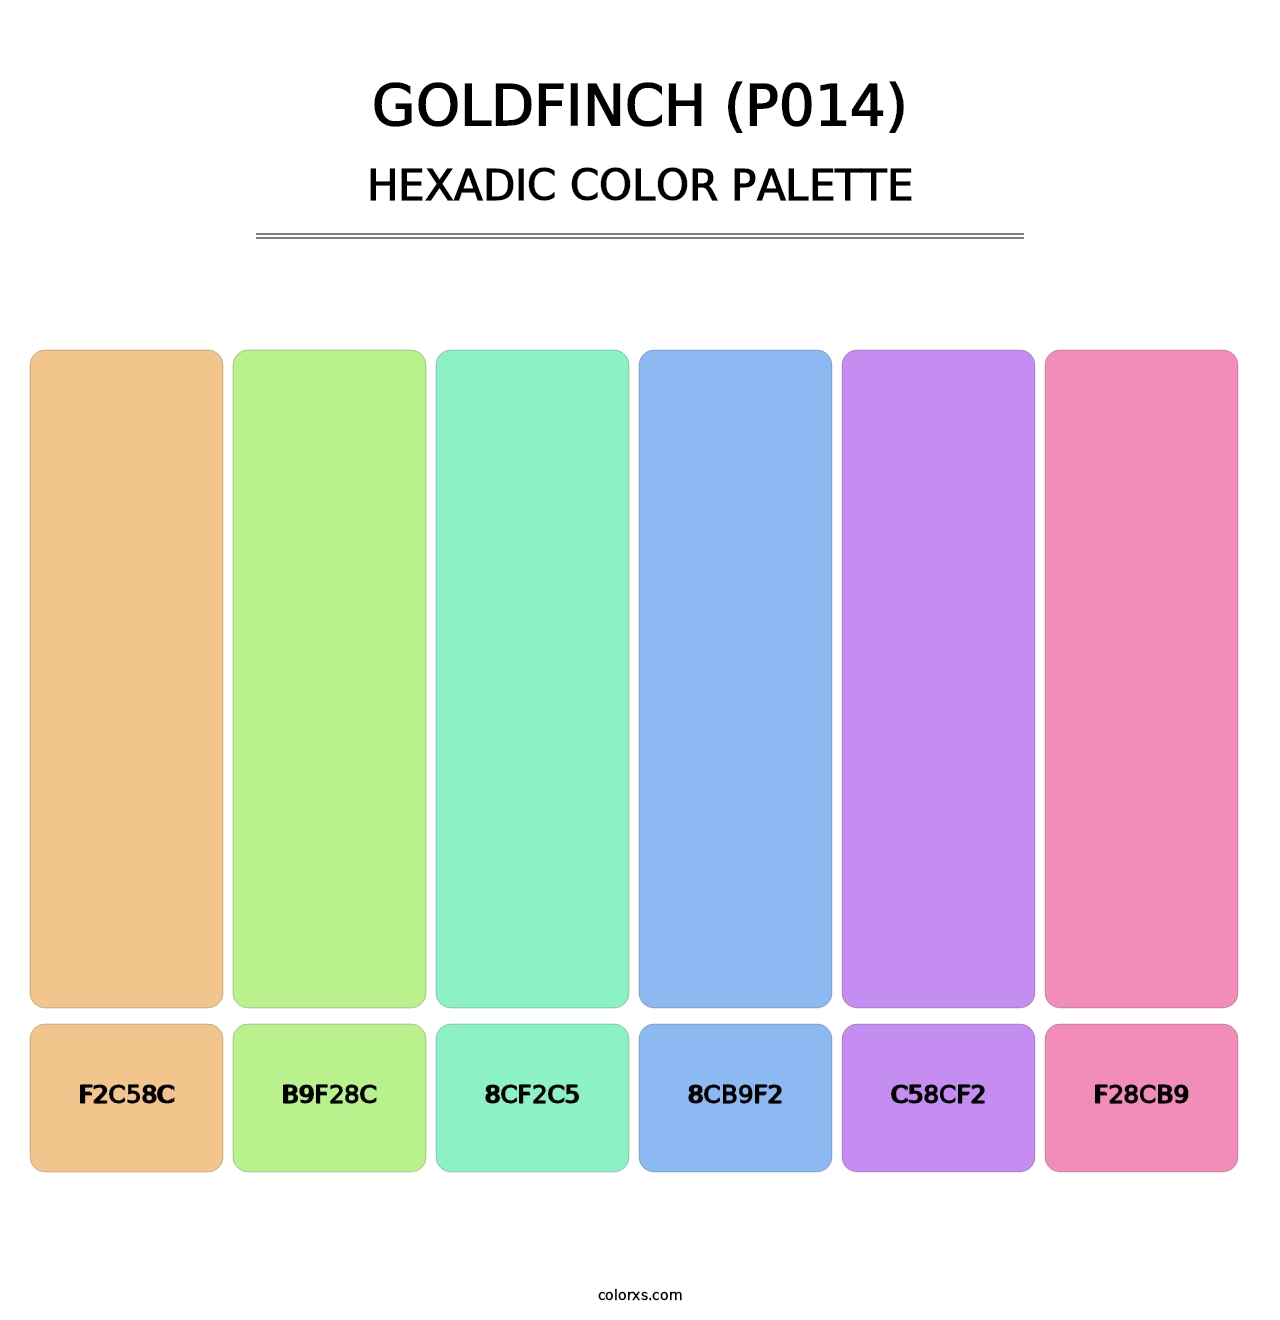 Goldfinch (P014) - Hexadic Color Palette